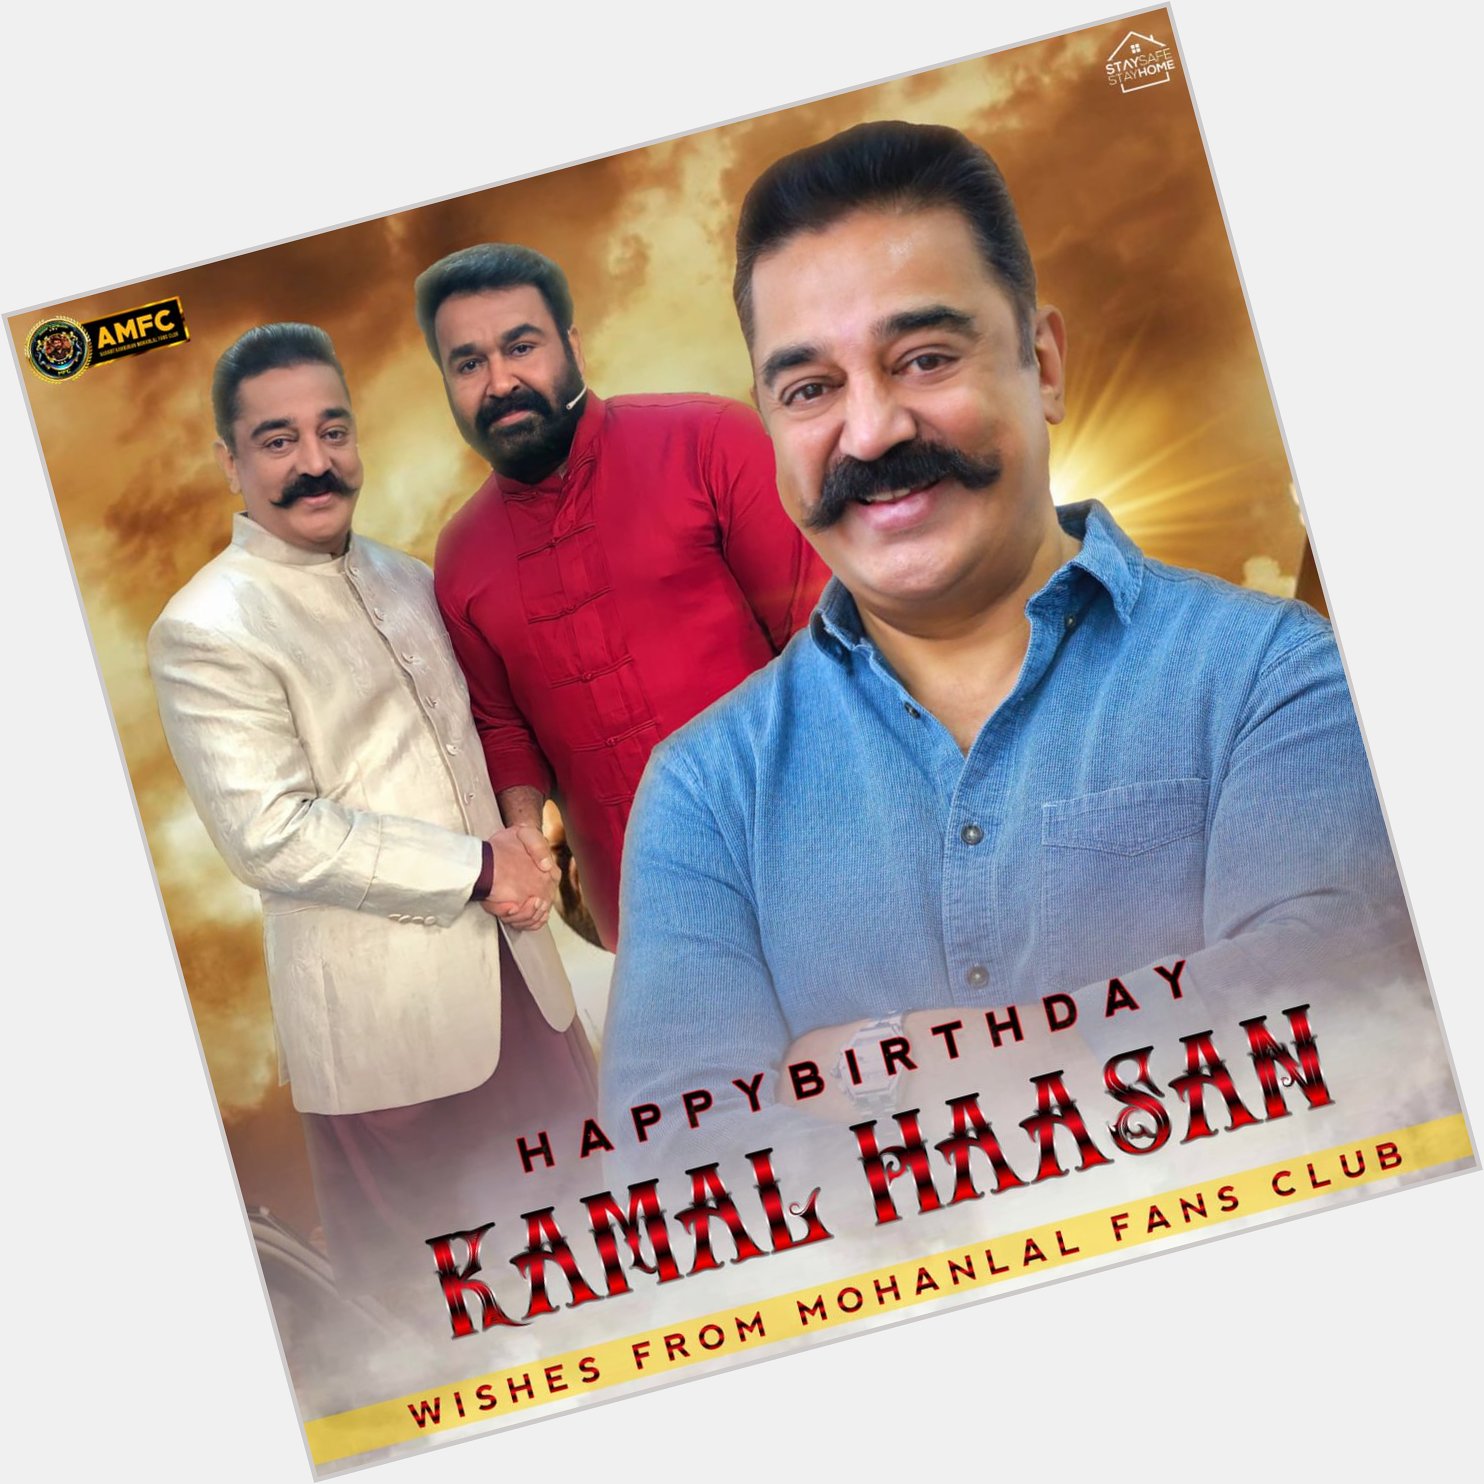 Happy birthday Kamal Haasan sir  Wishes from Fans  